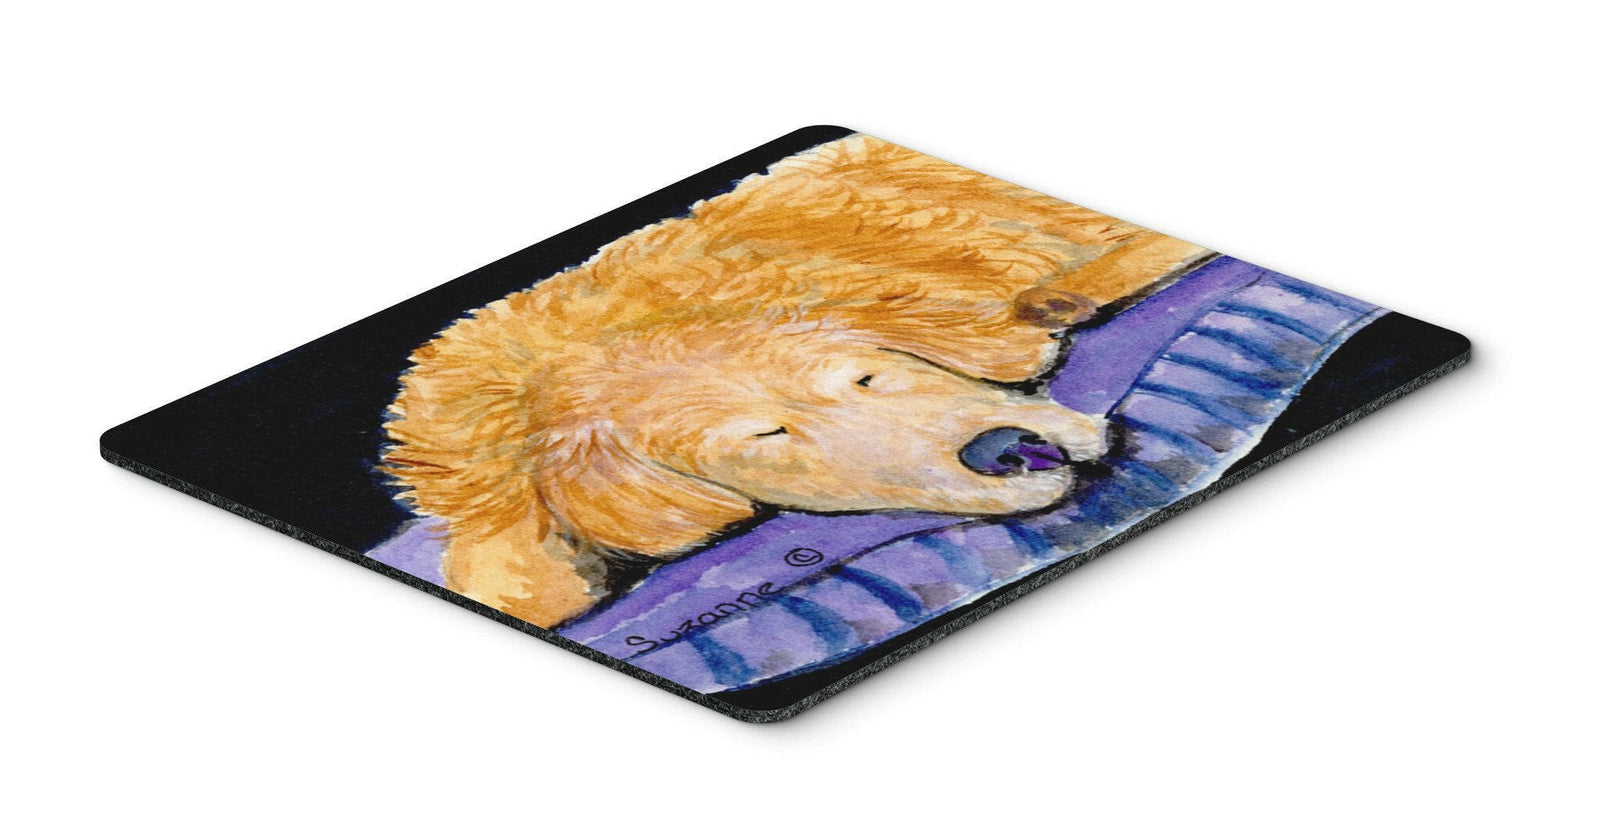 Golden Retriever Mouse pad, hot pad, or trivet by Caroline's Treasures